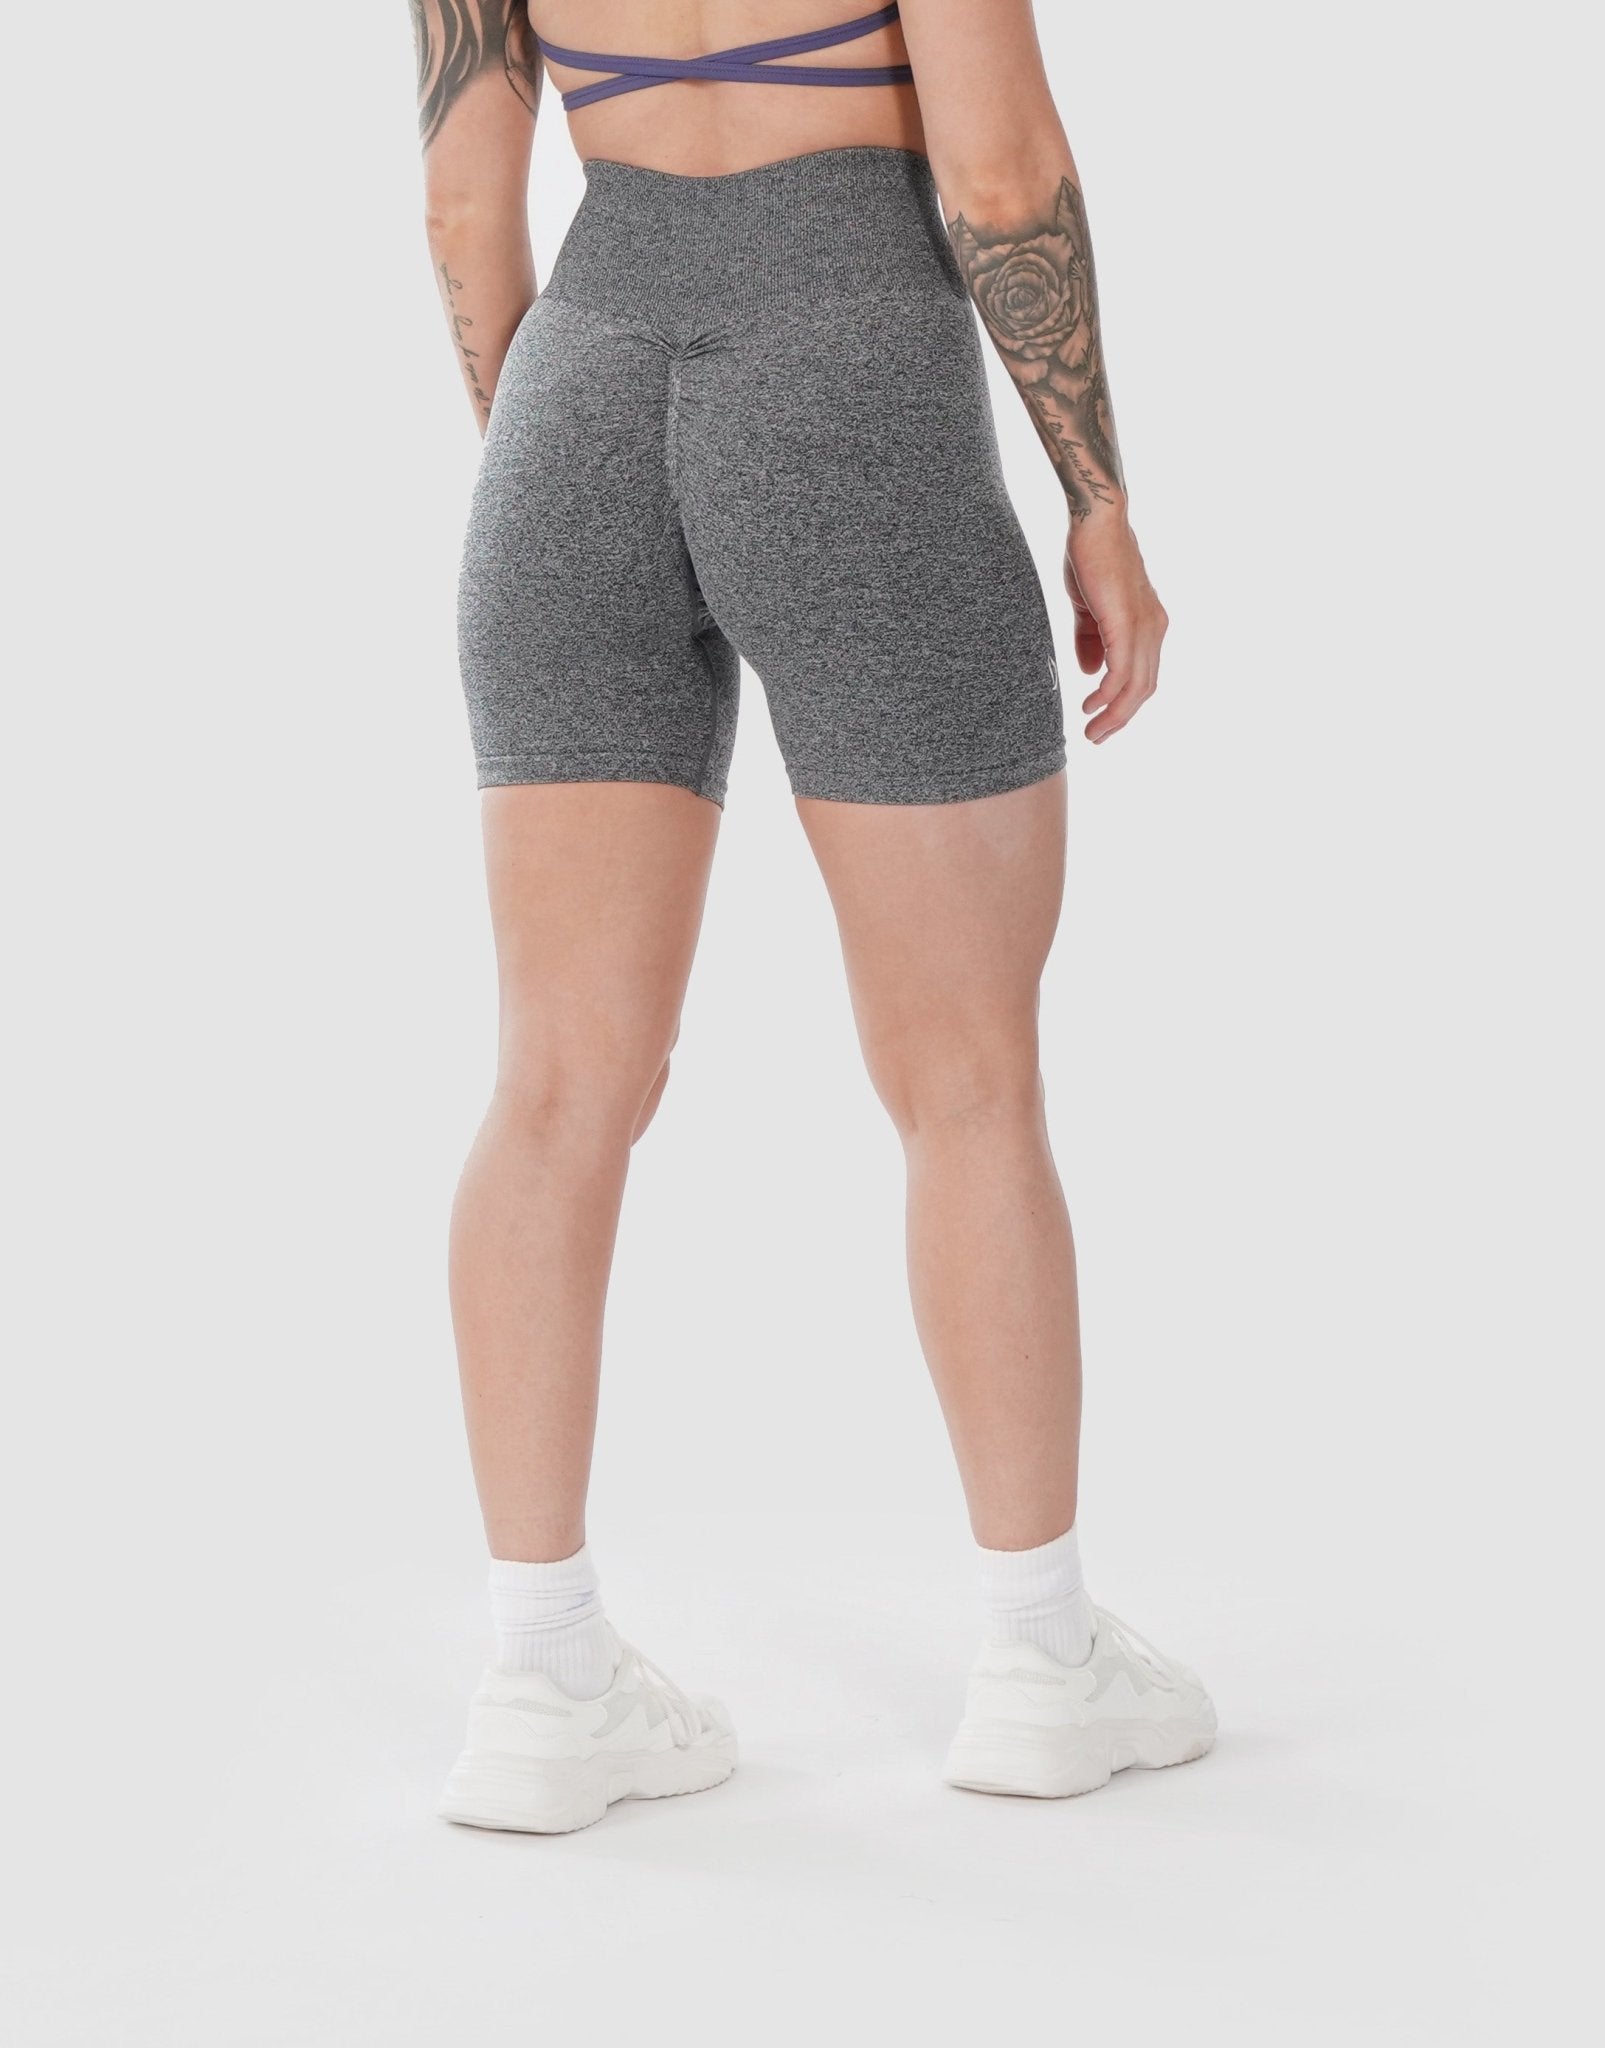 Empowerclothingltd Elle Collection Launch 2.0 - Grey High Waisted Scrunch  Bum Shorts - Empowerclothingltd